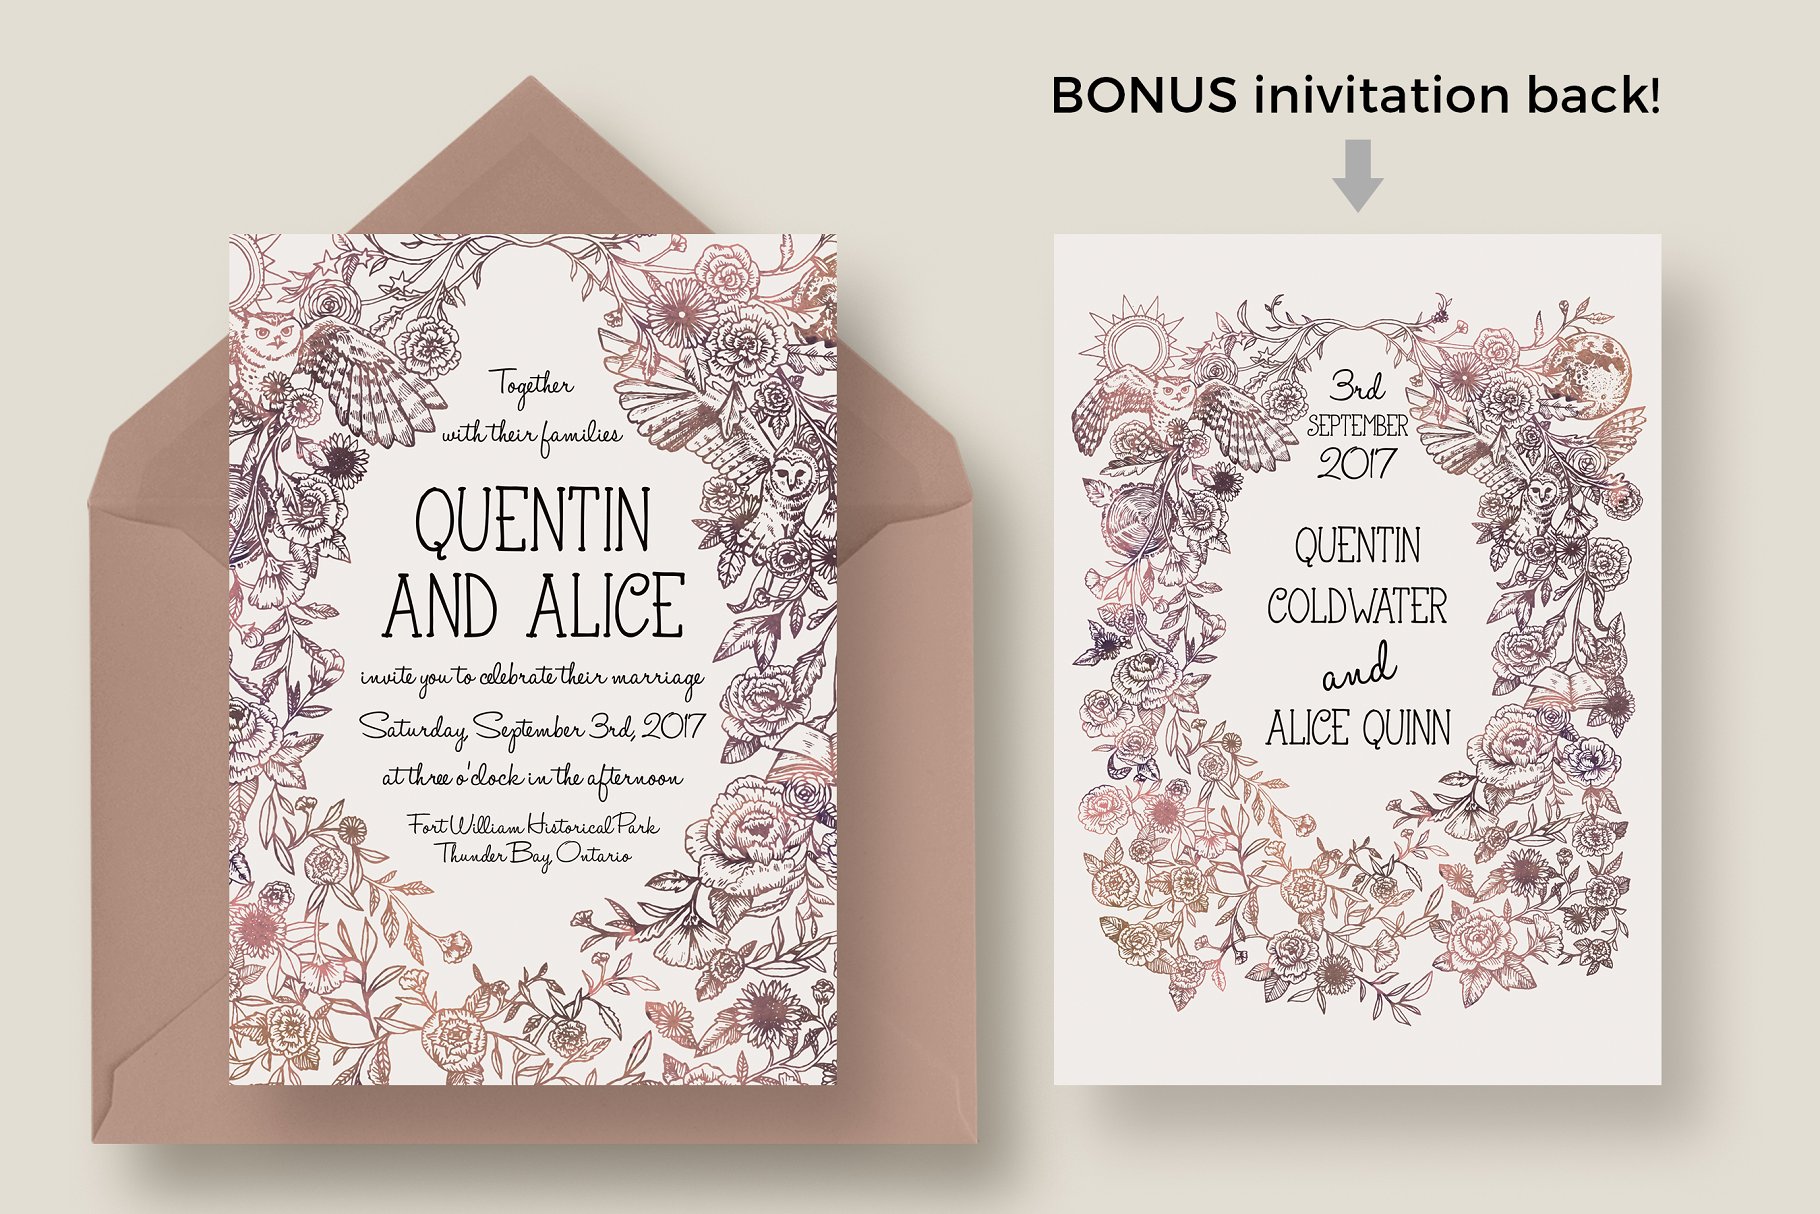 魔幻手绘水彩花卉婚礼主题平面设计套件 Magical Collage Wedding Suite插图(1)